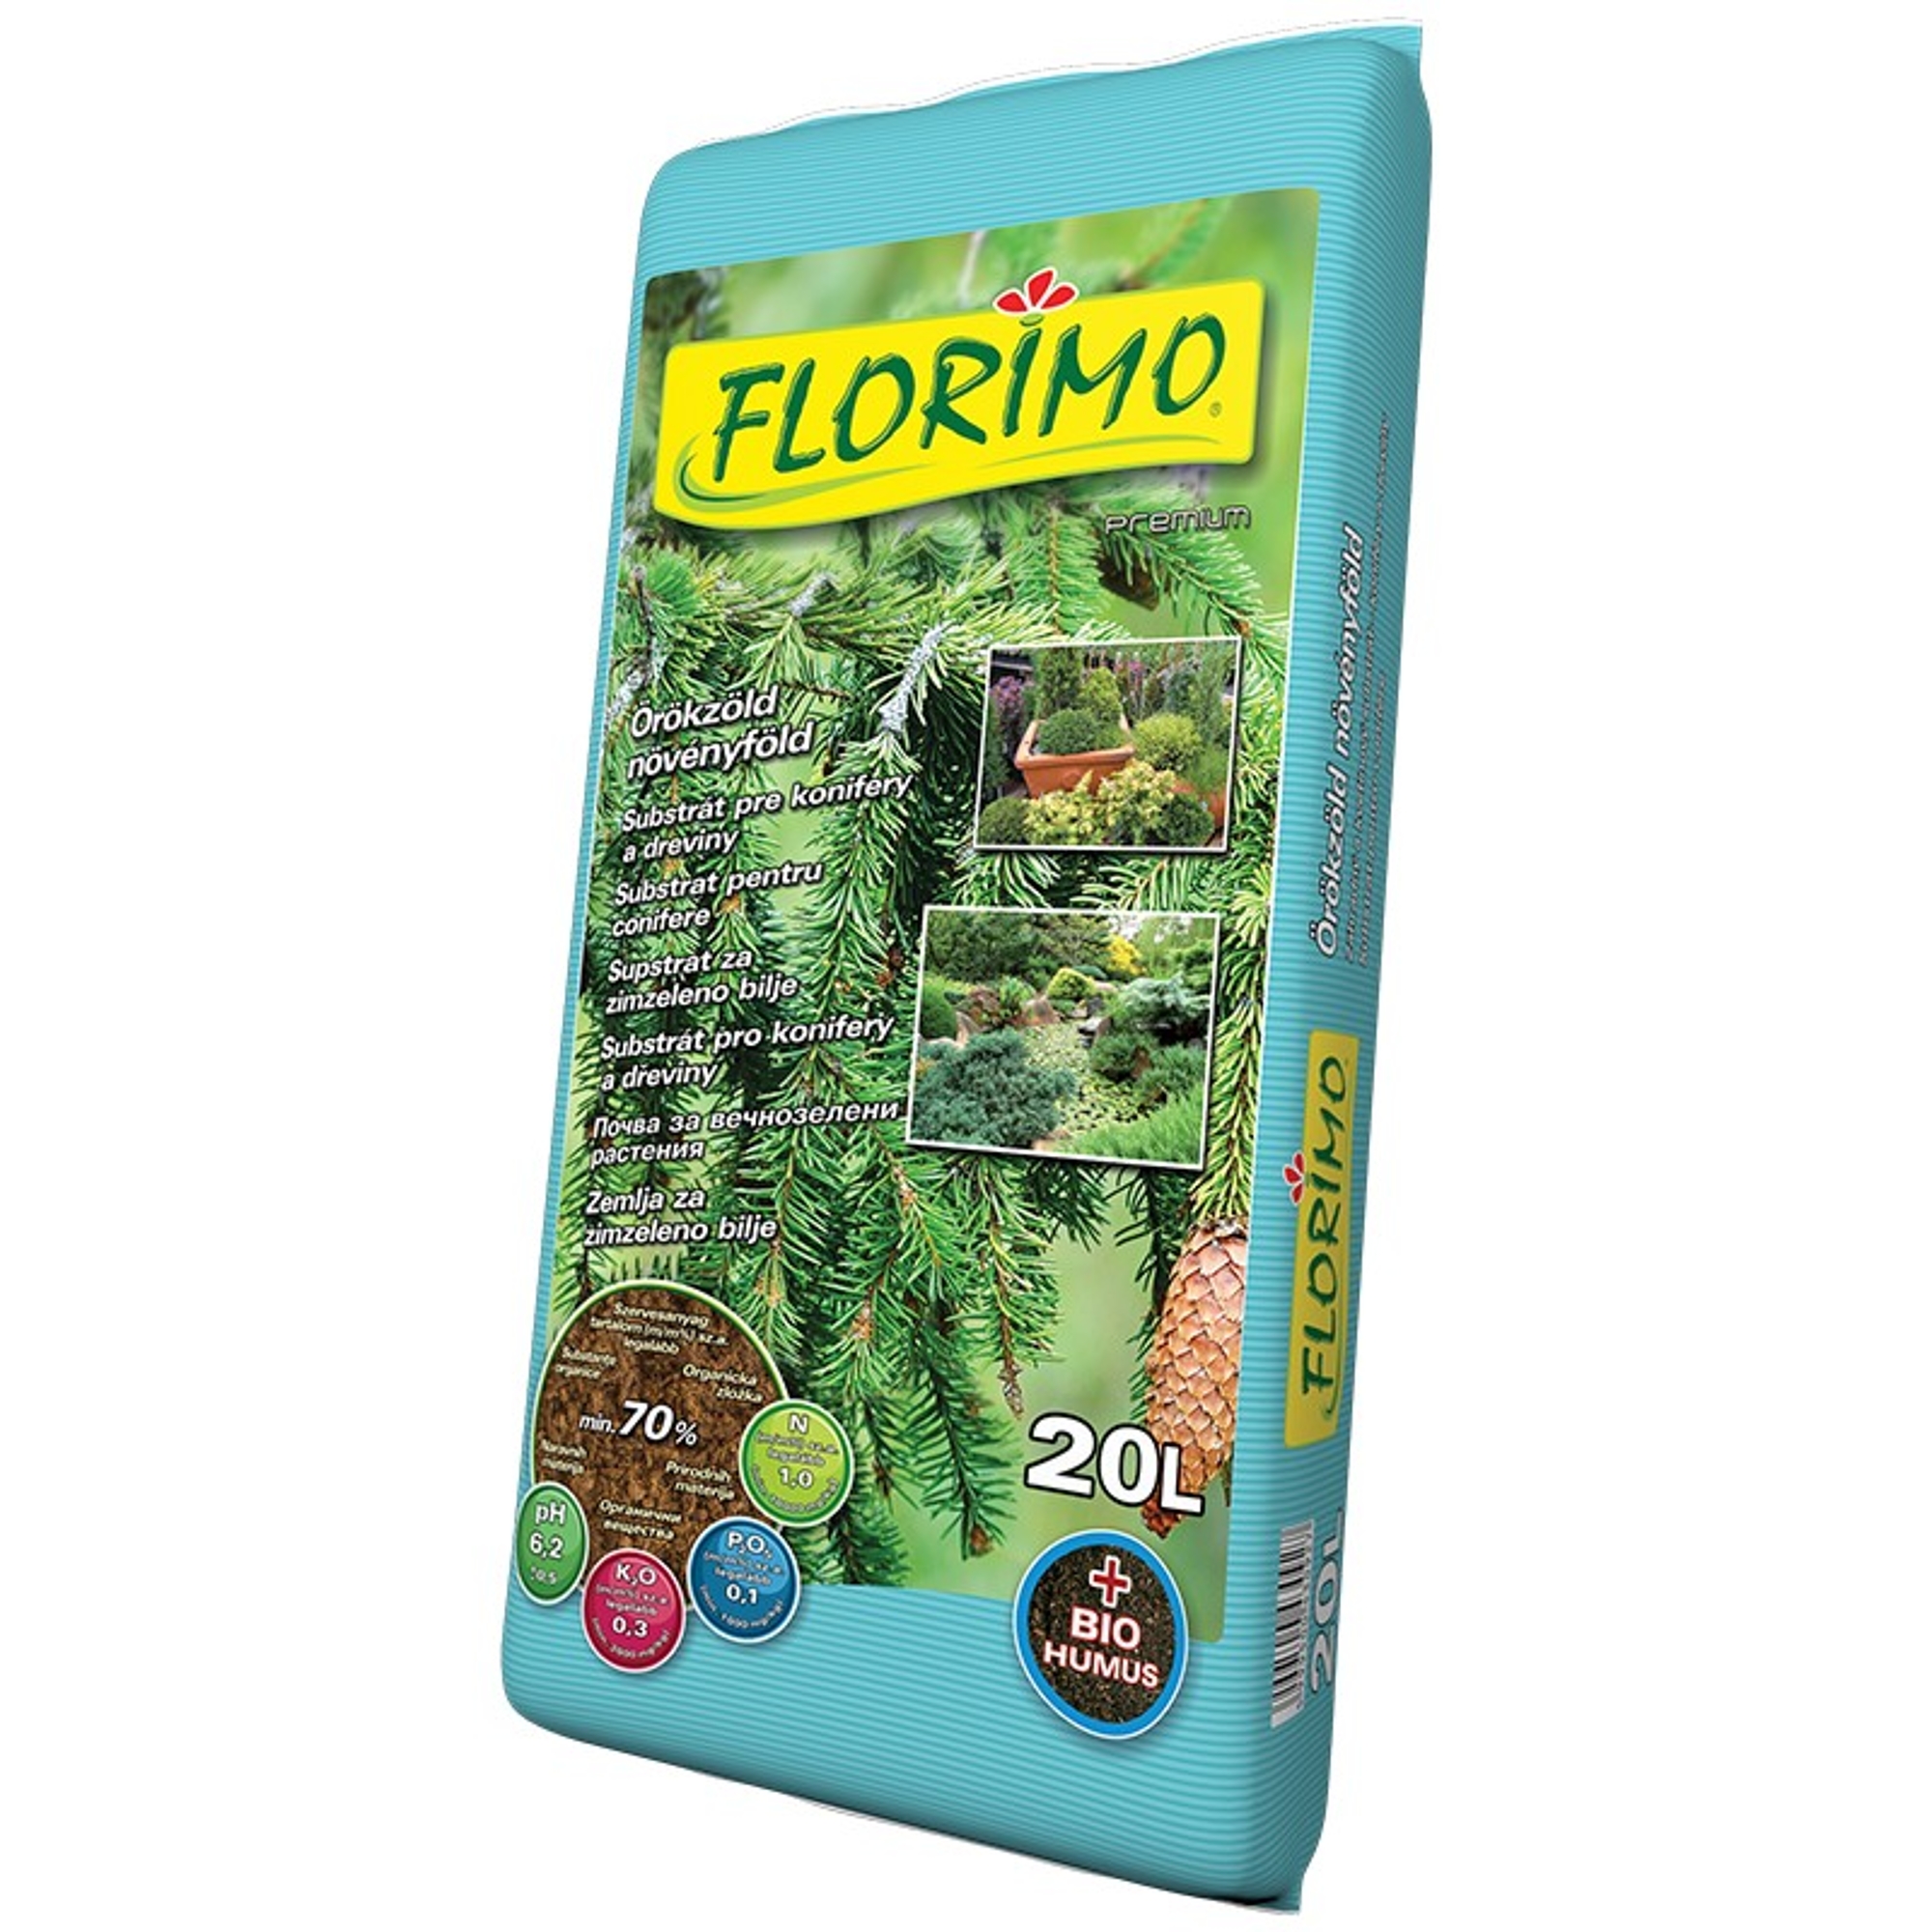 Florimo örökzöld növényföld 20 l